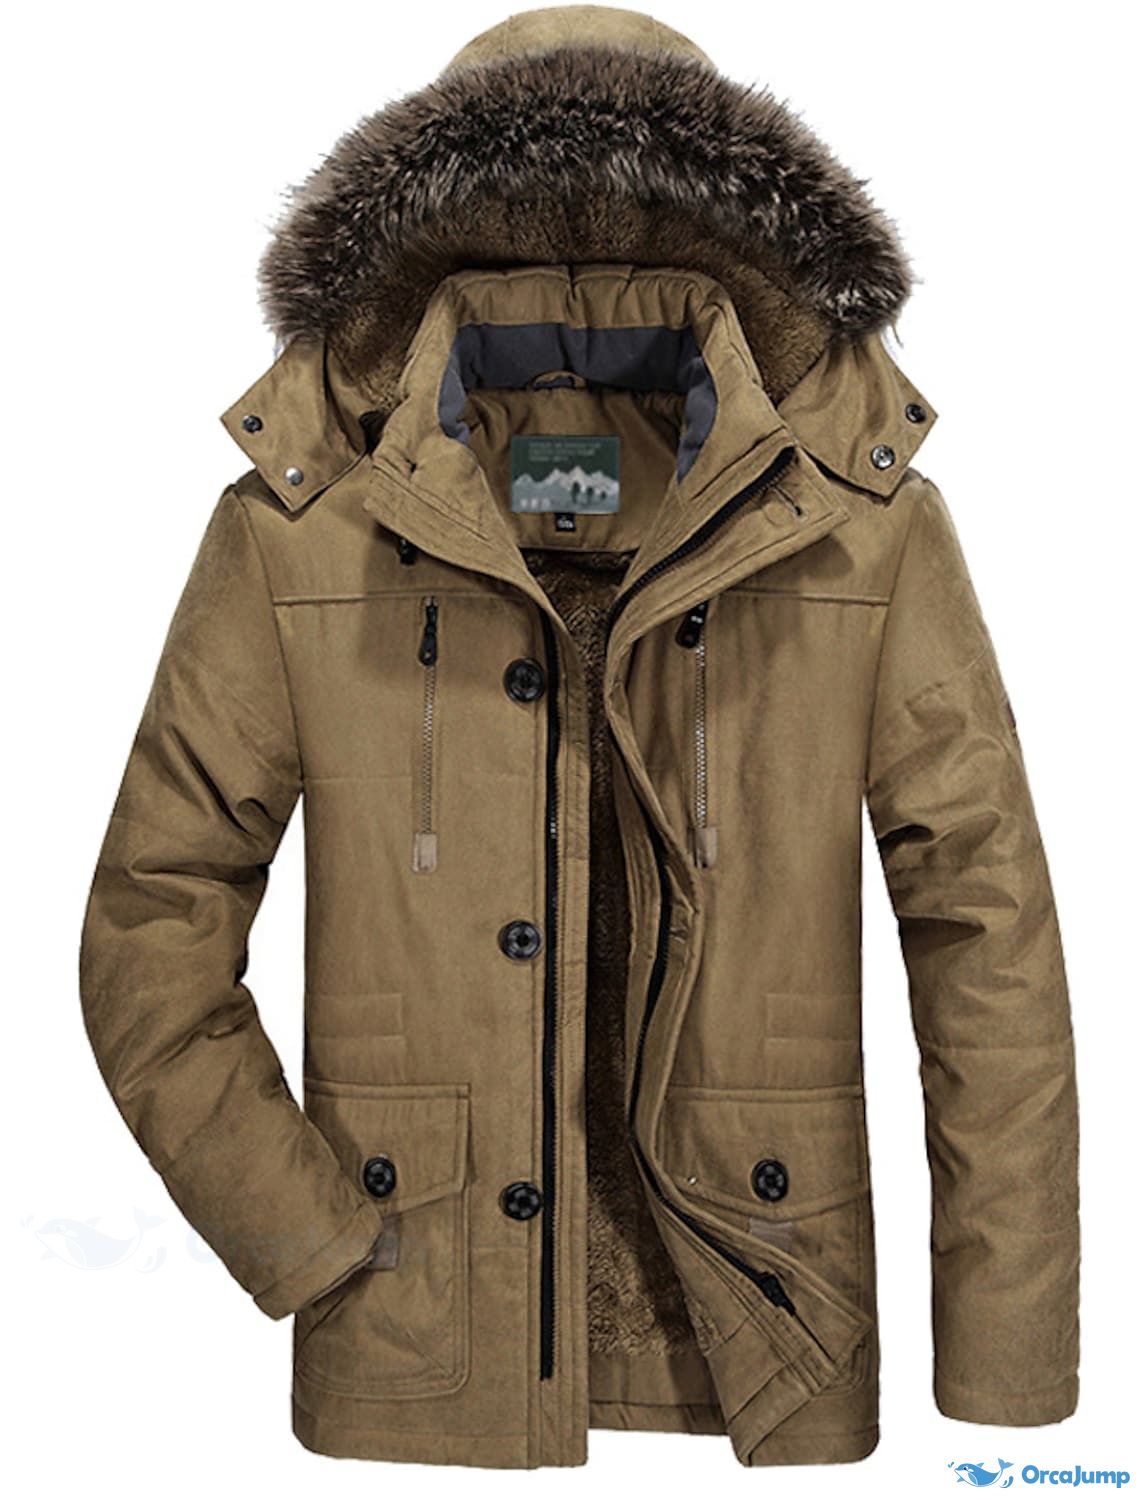 OrcaJump - Mens Winter Parka Jacket with Fleece Lining, Windproof, Sol